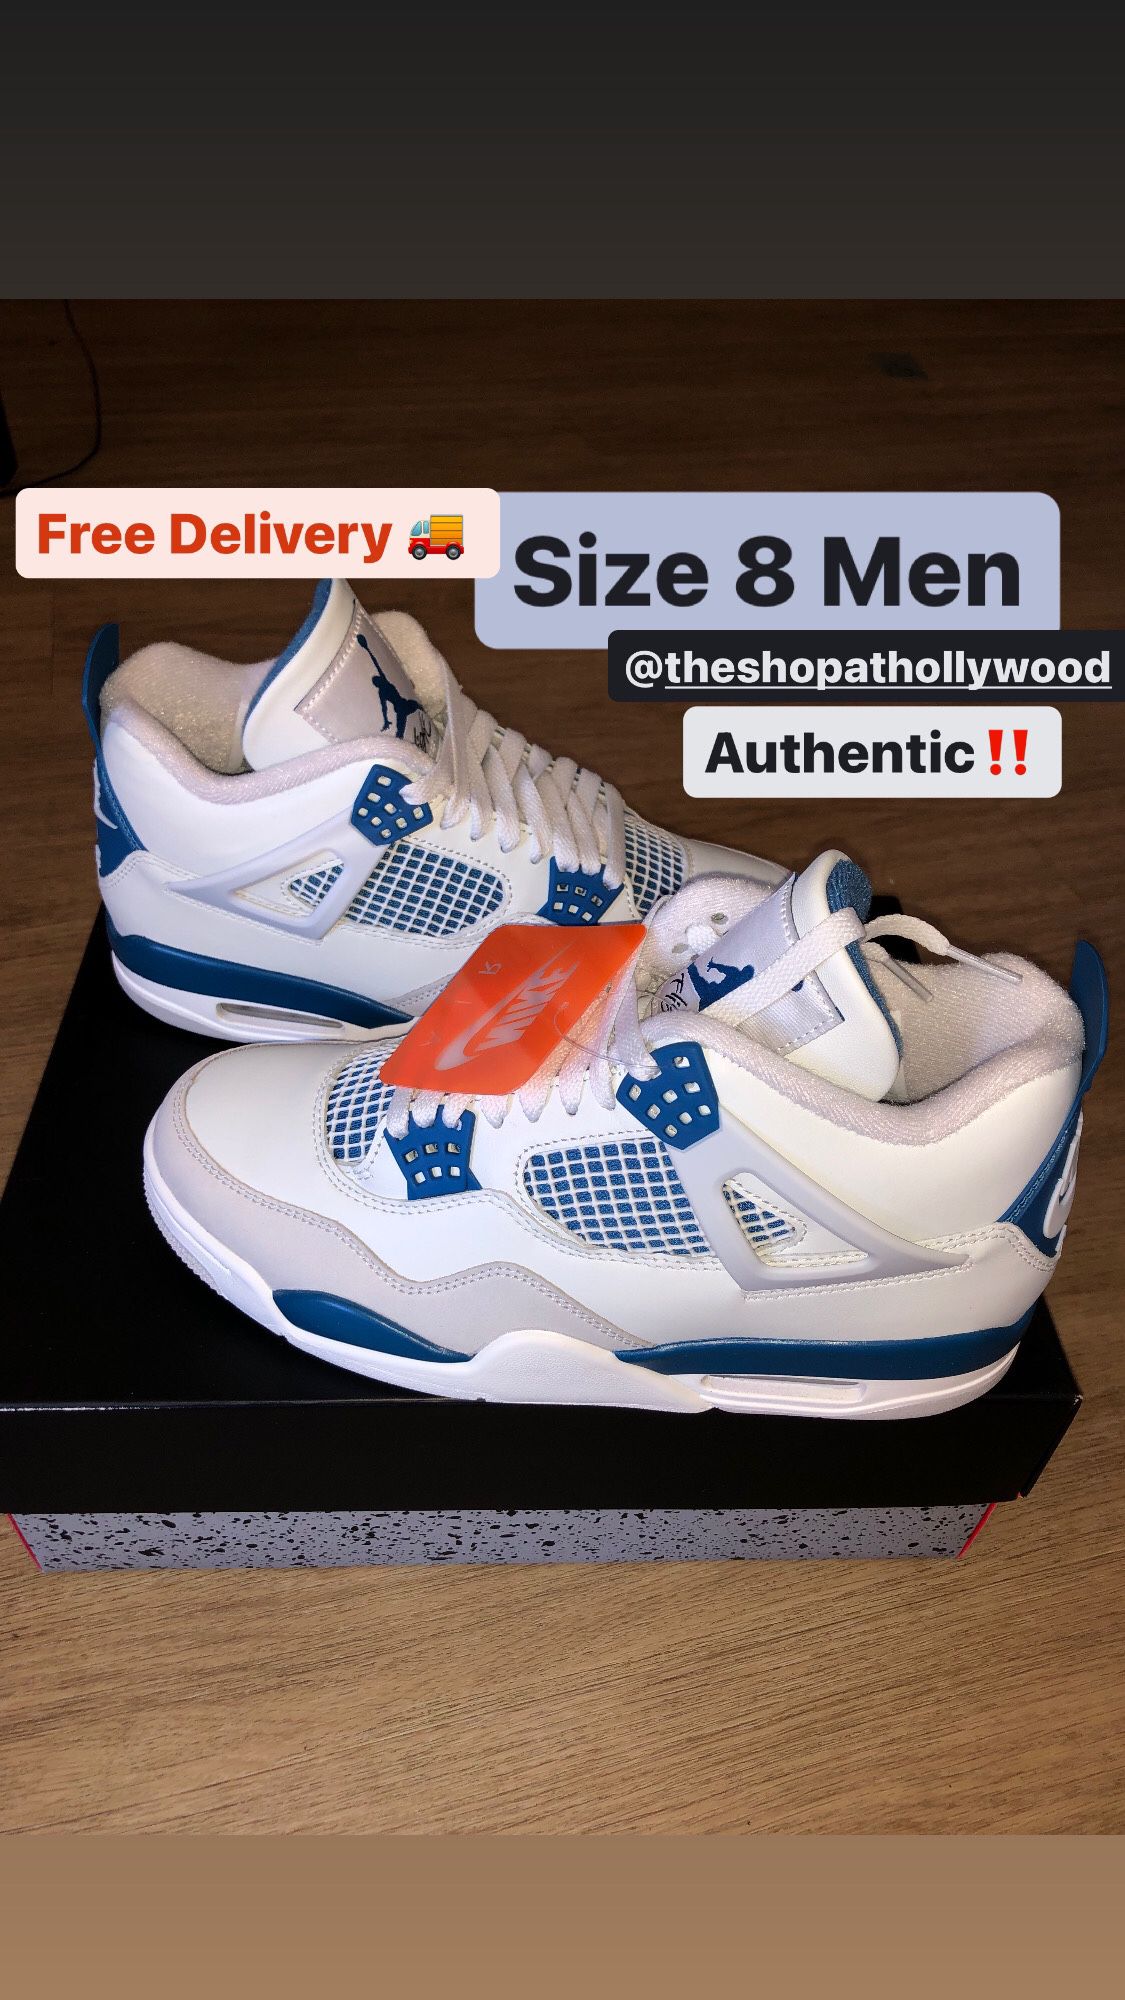 New Air Jordan Retro 4 Size 8 Men, Industrial Blue